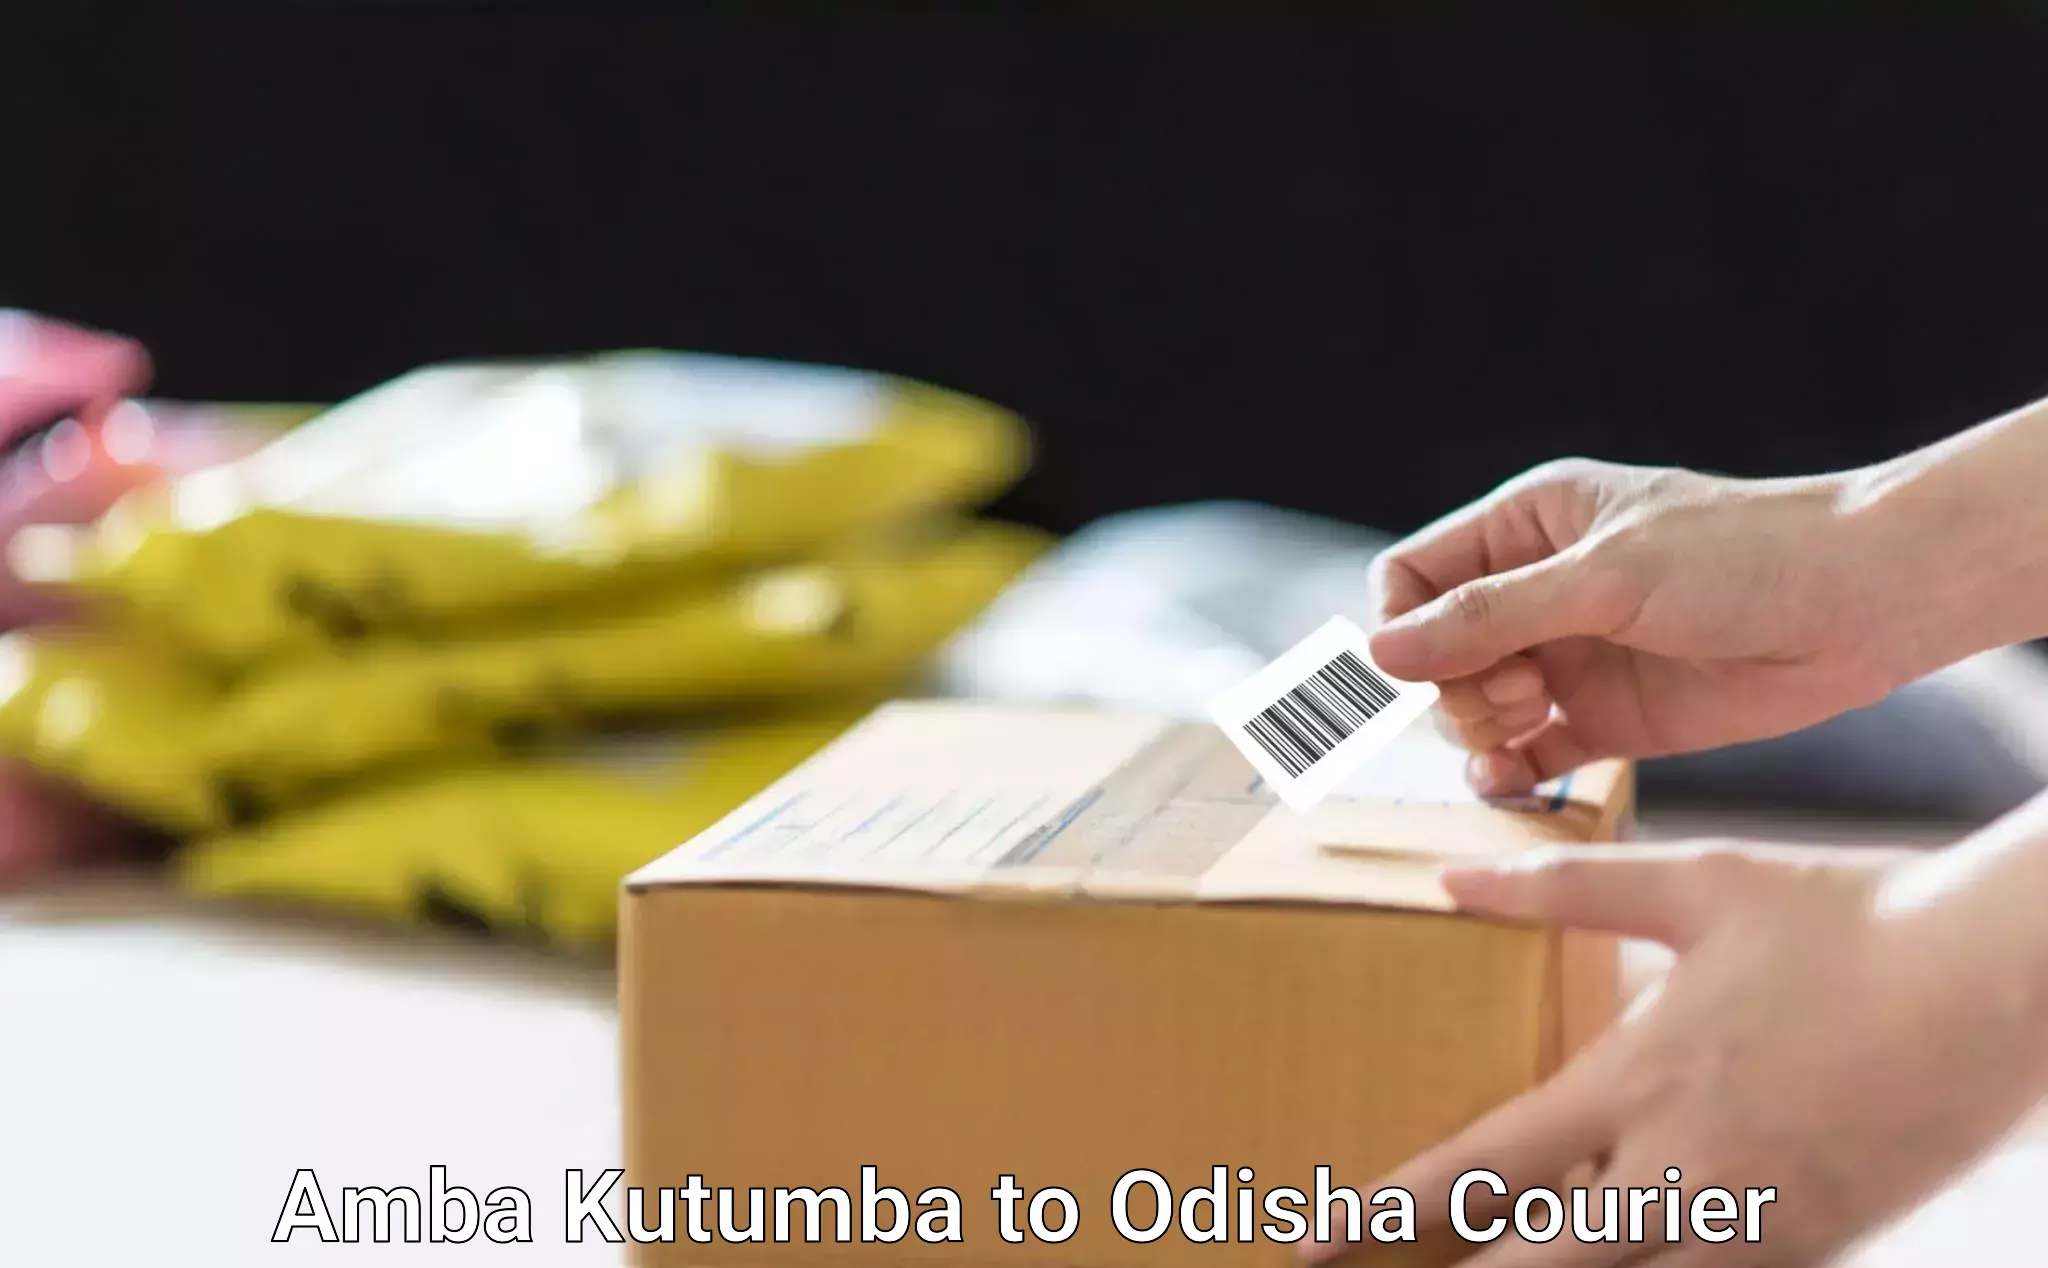 Furniture moving experts Amba Kutumba to Balikuda